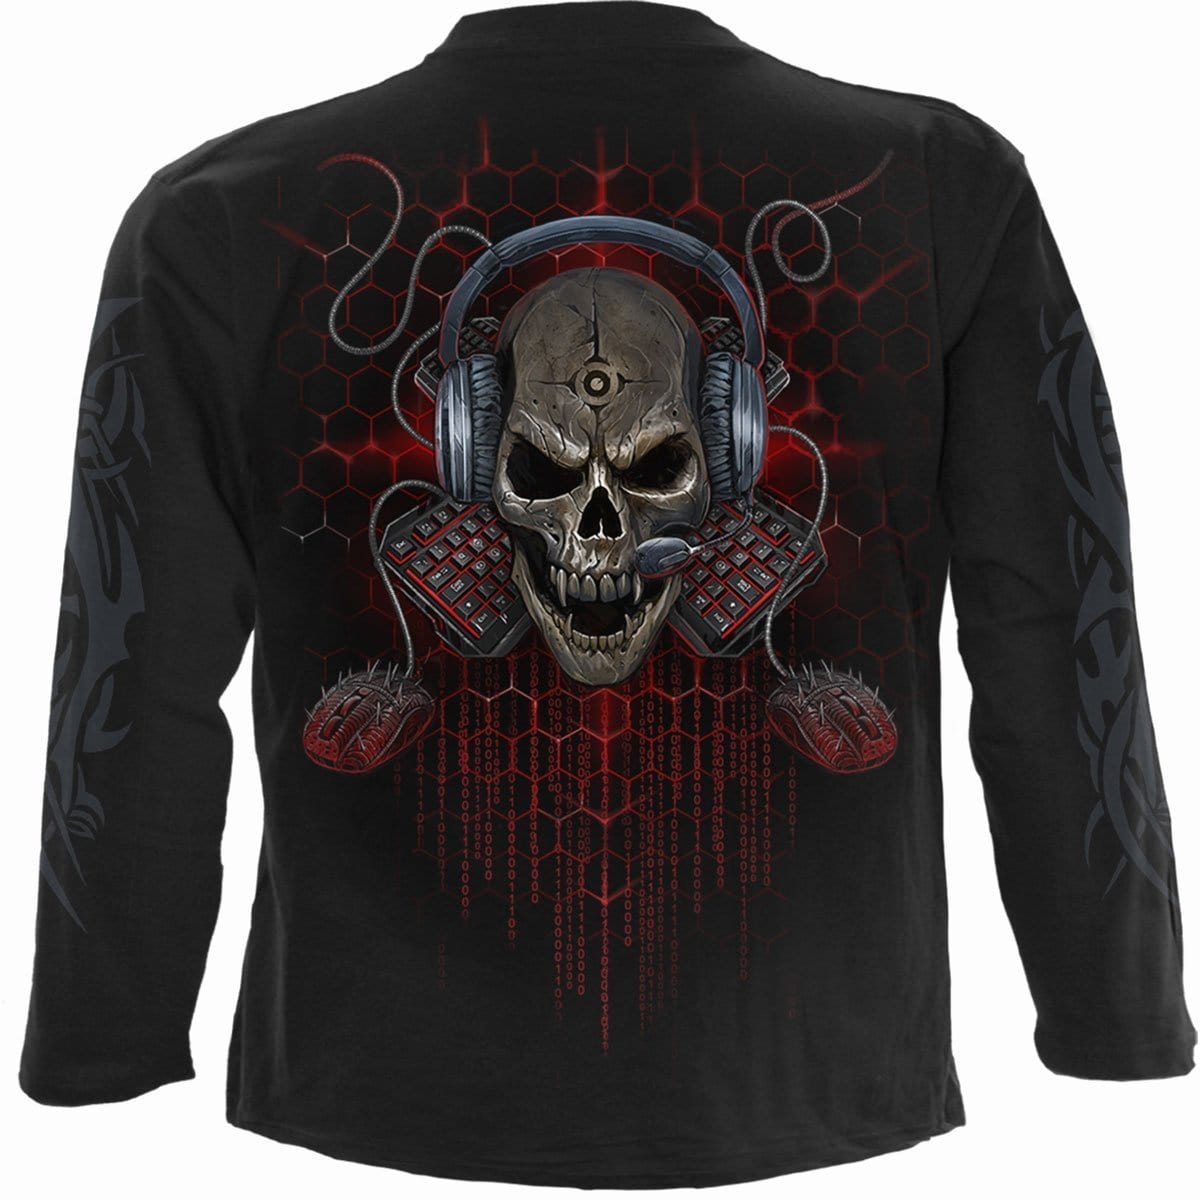 PC GAMER - Longsleeve T-Shirt Black - Spiral USA